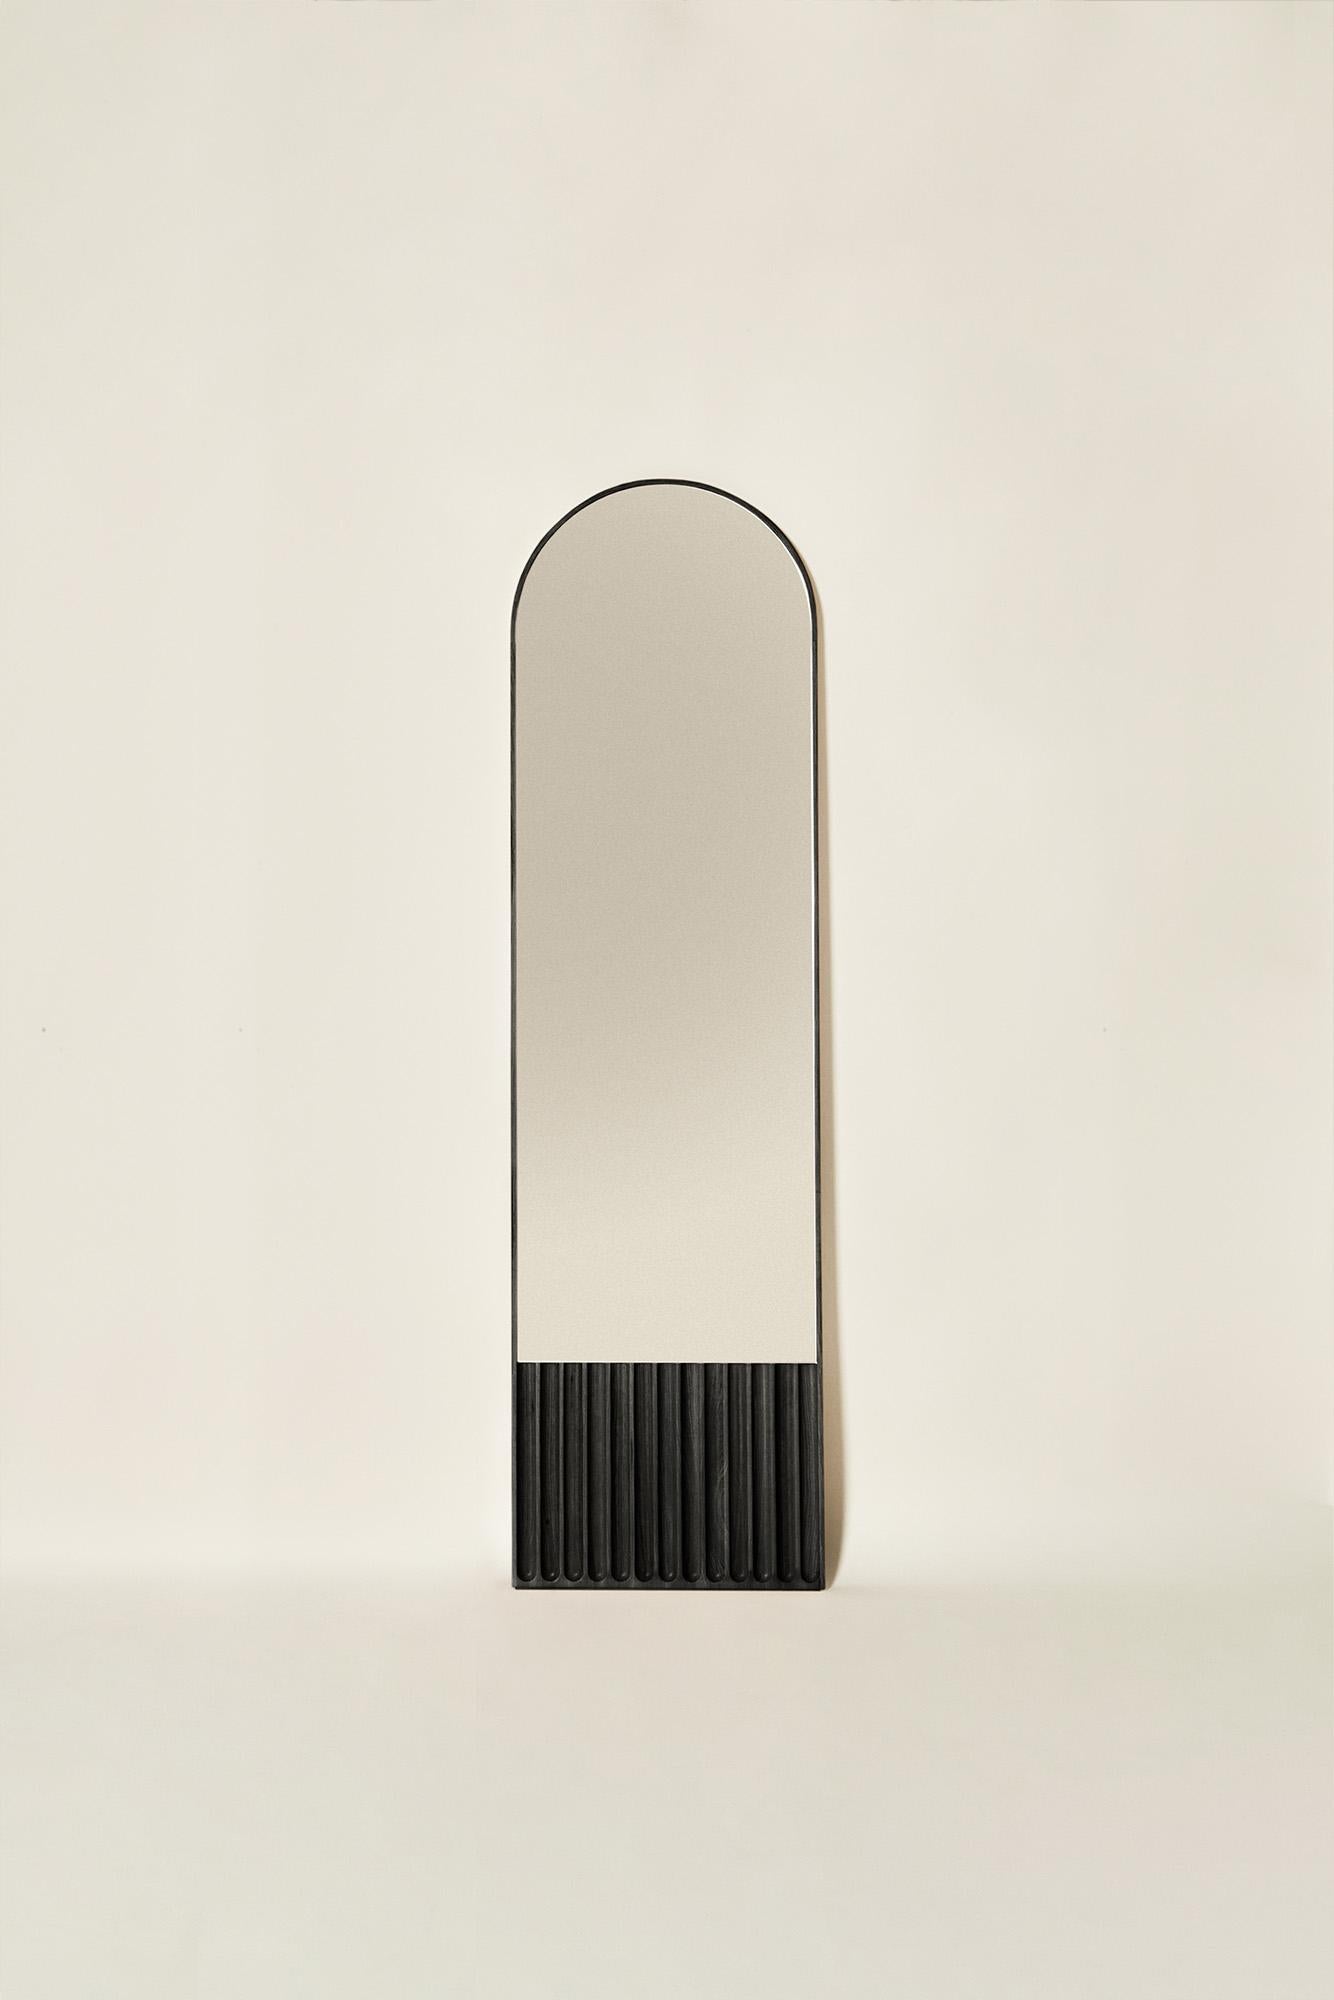 Tutto Sesto Solid Wood Oval Mirror, Ash in Brown Finish, Contemporary For Sale 1